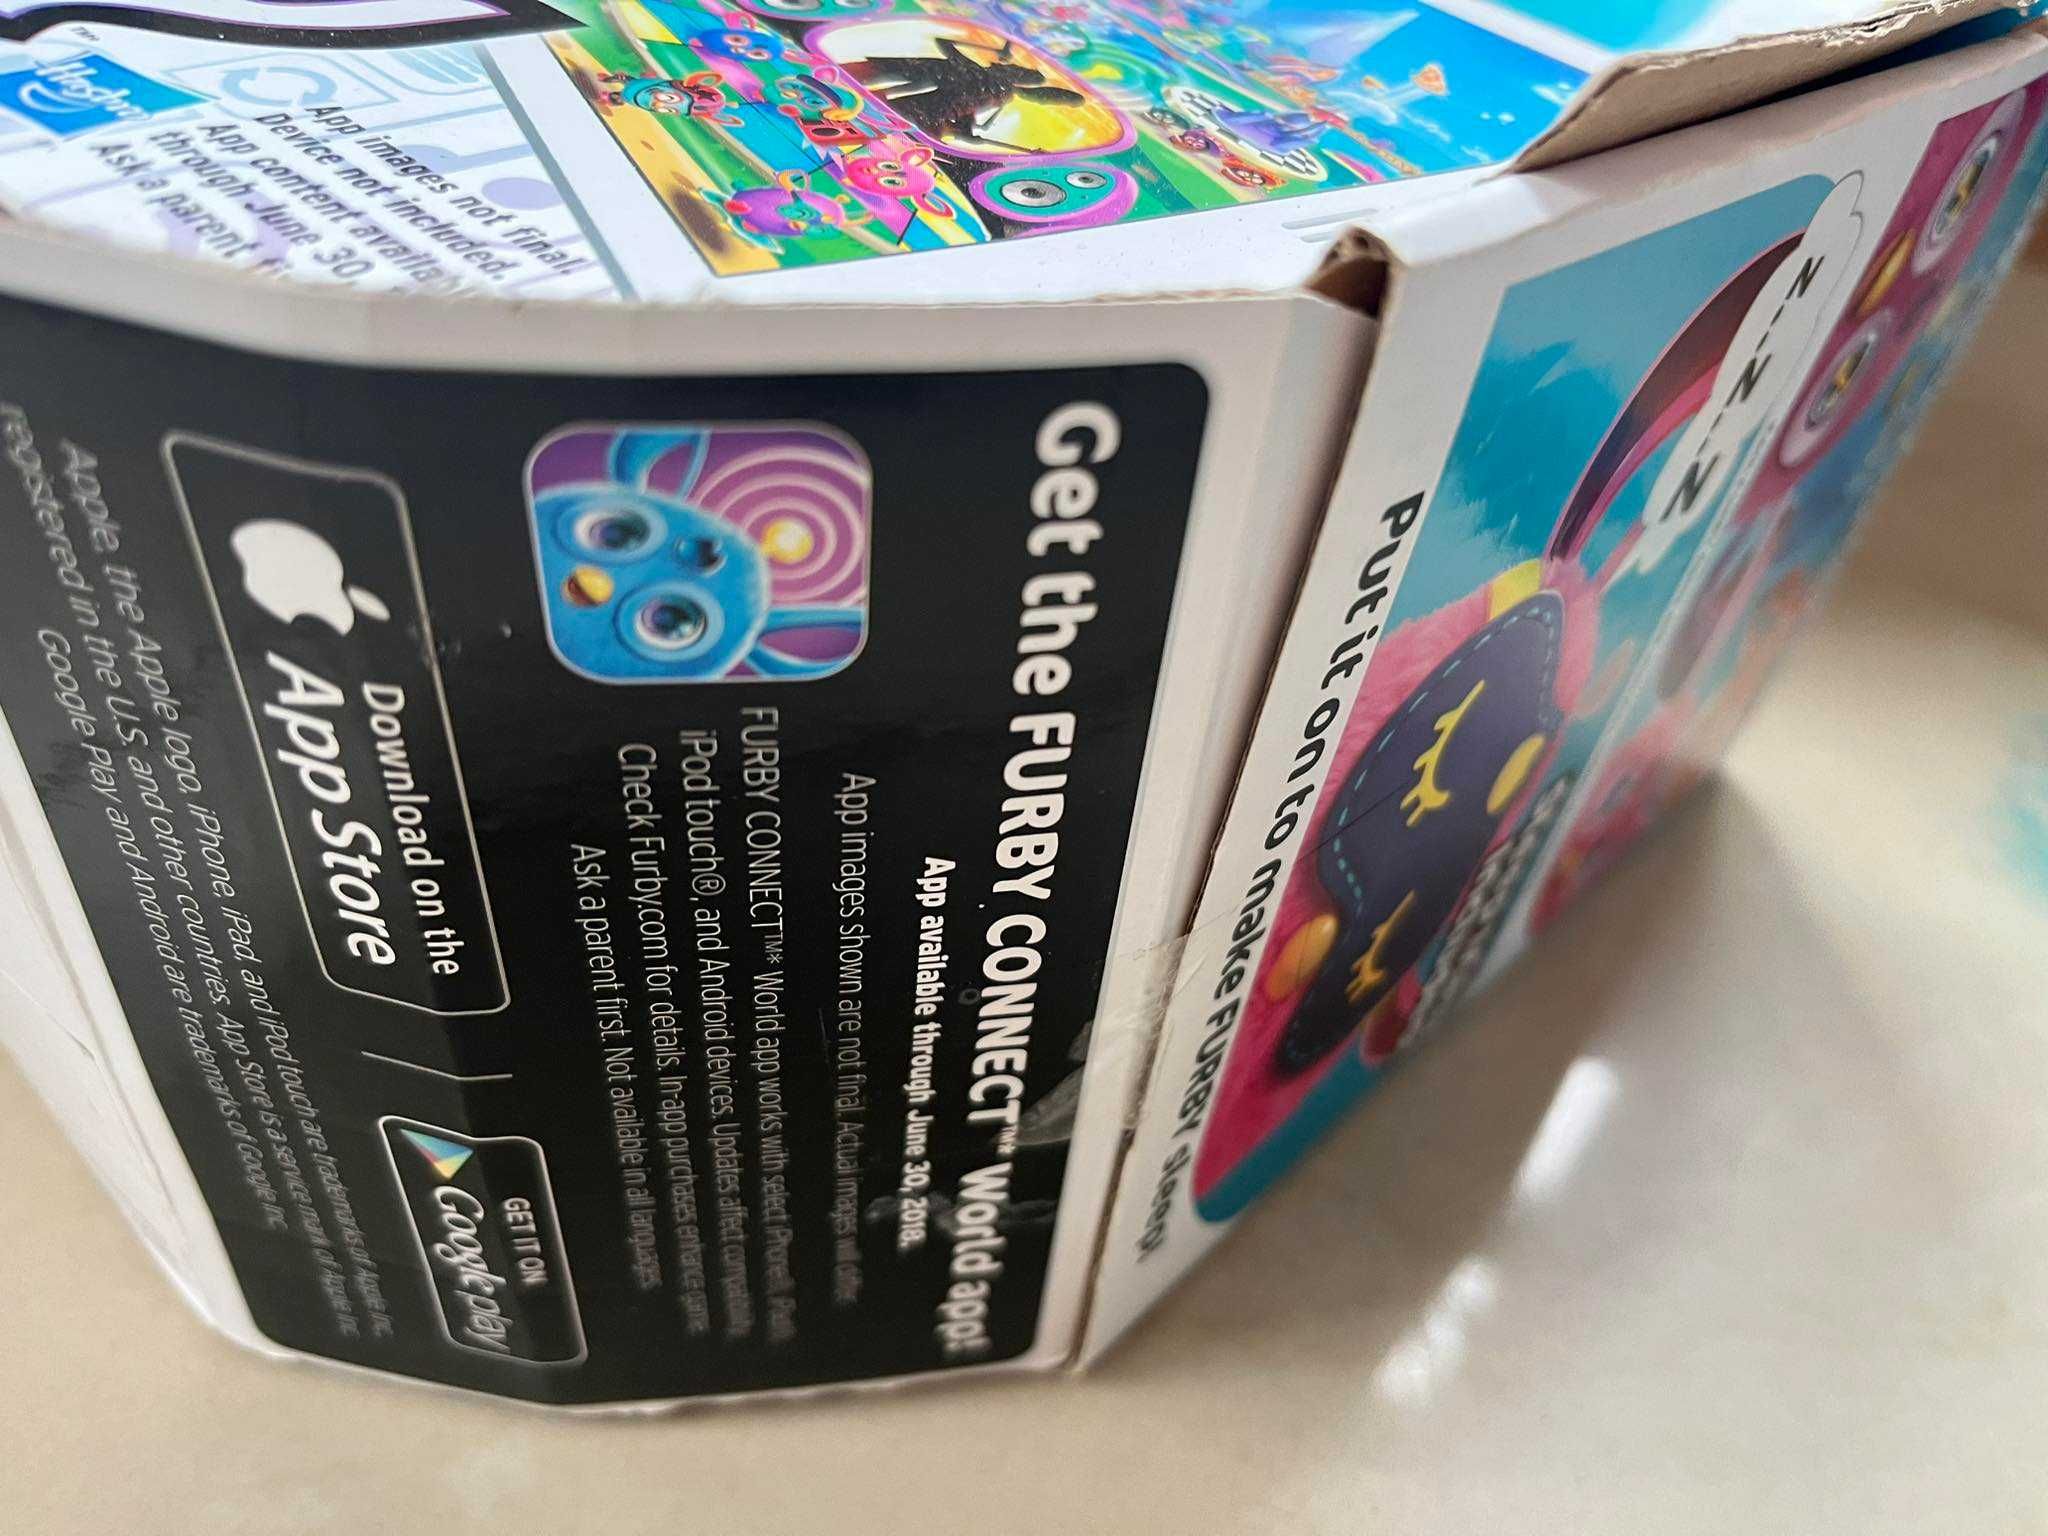 Maskotka HASBRO Furby Connect Bluetooth niebieski w pudełku